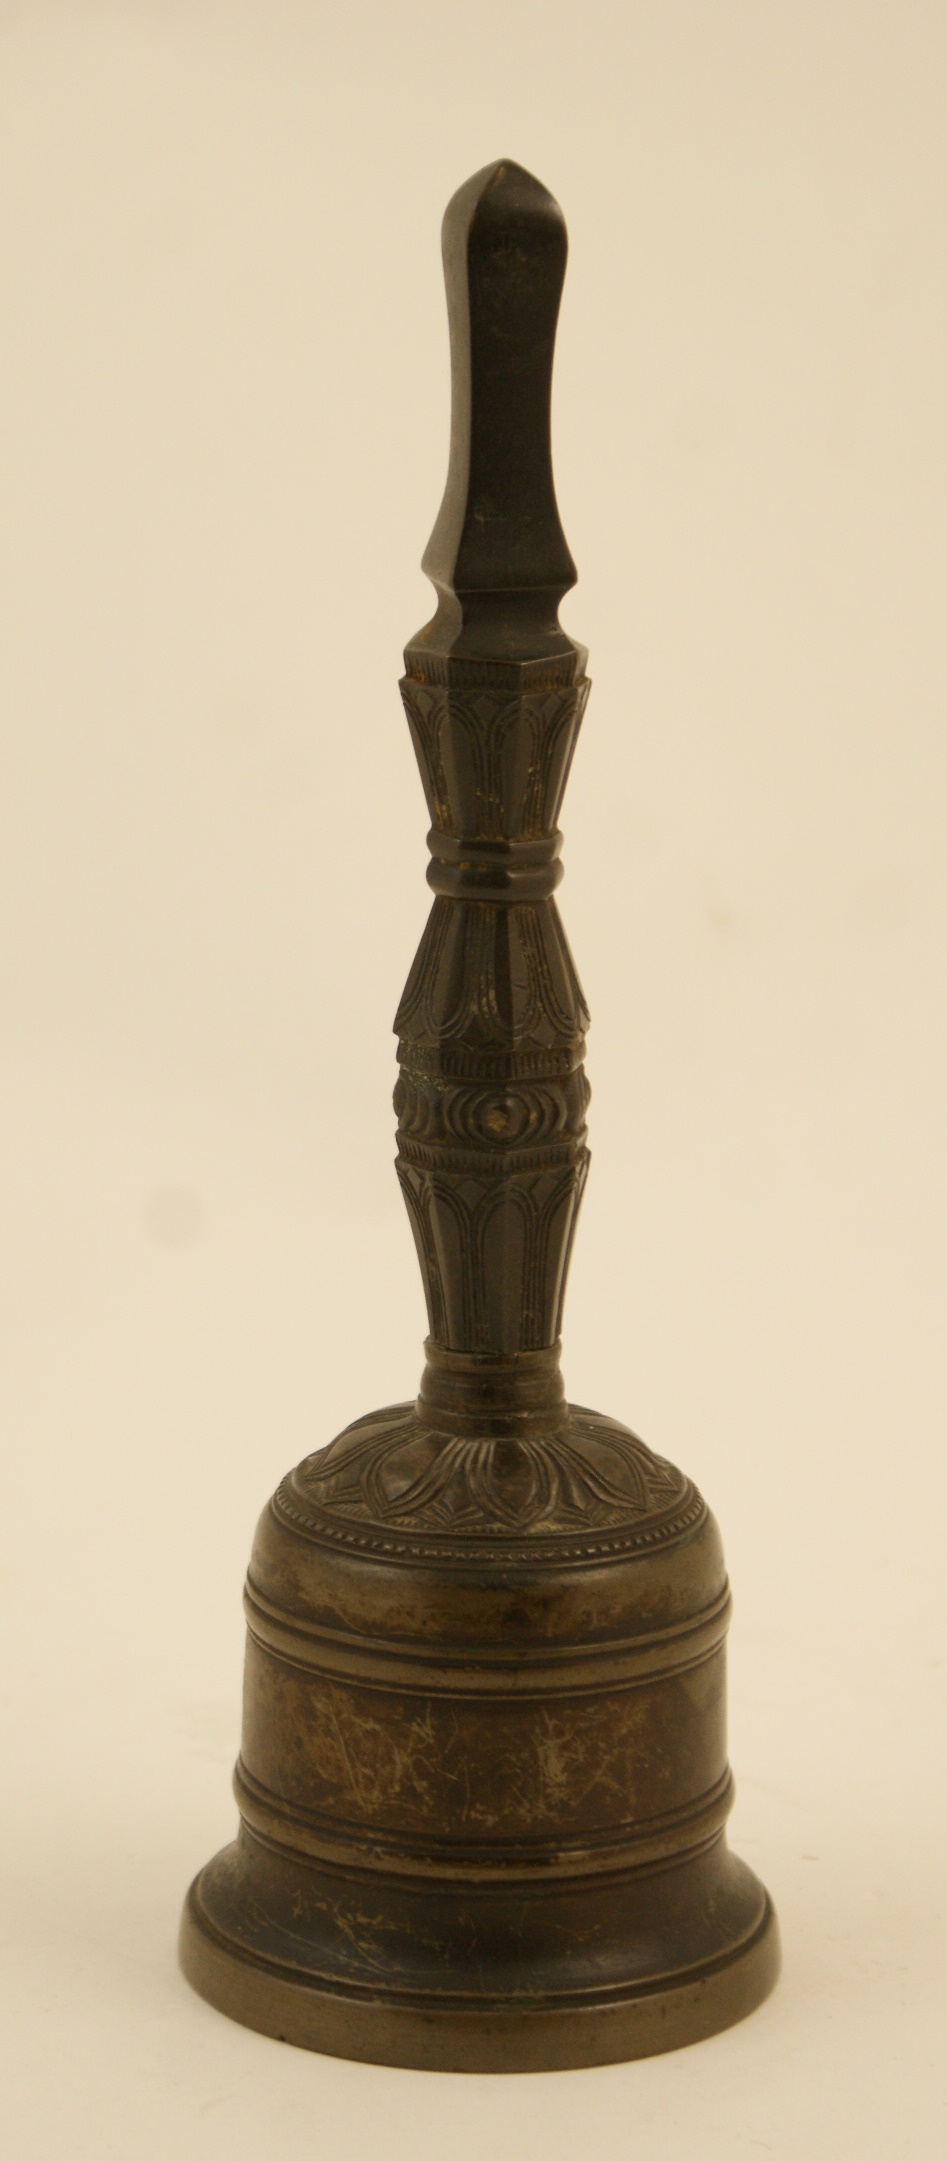 Oriental bronze Buddhist ritual bell, Japanese or Chinese, 19th Century,